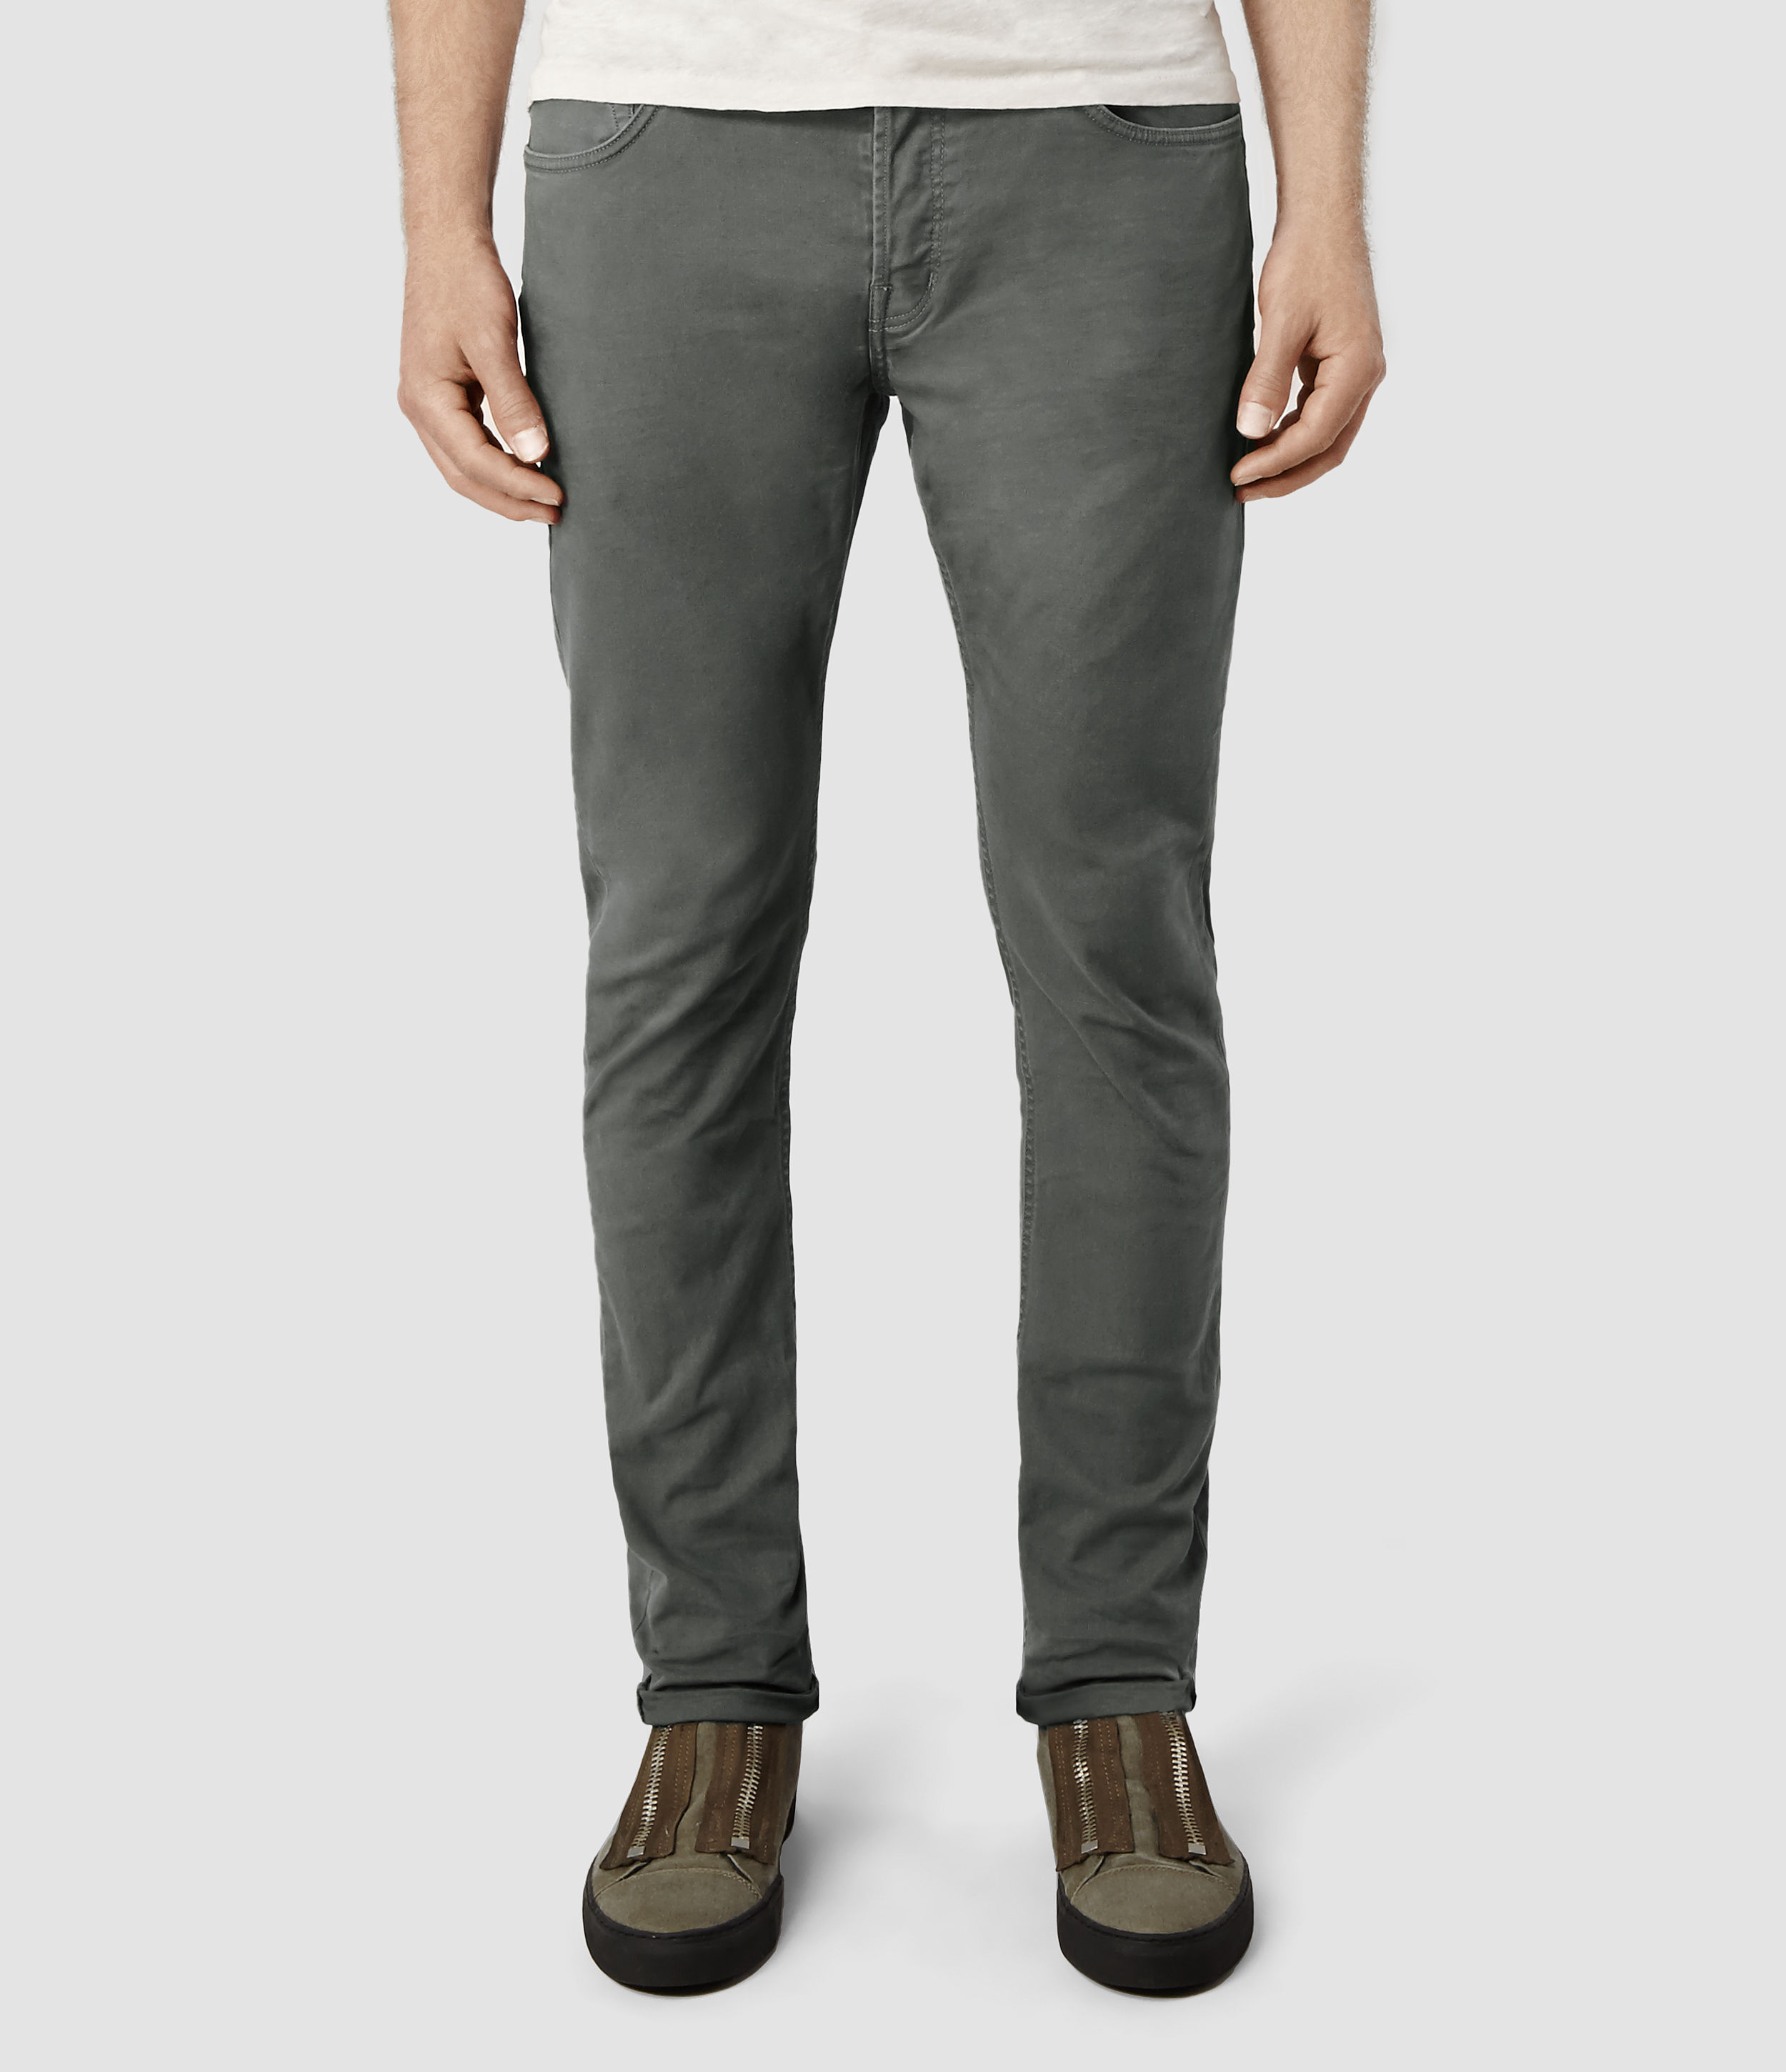 AllSaints Sodium Iggy Jeans in Slate (Gray) for Men - Lyst